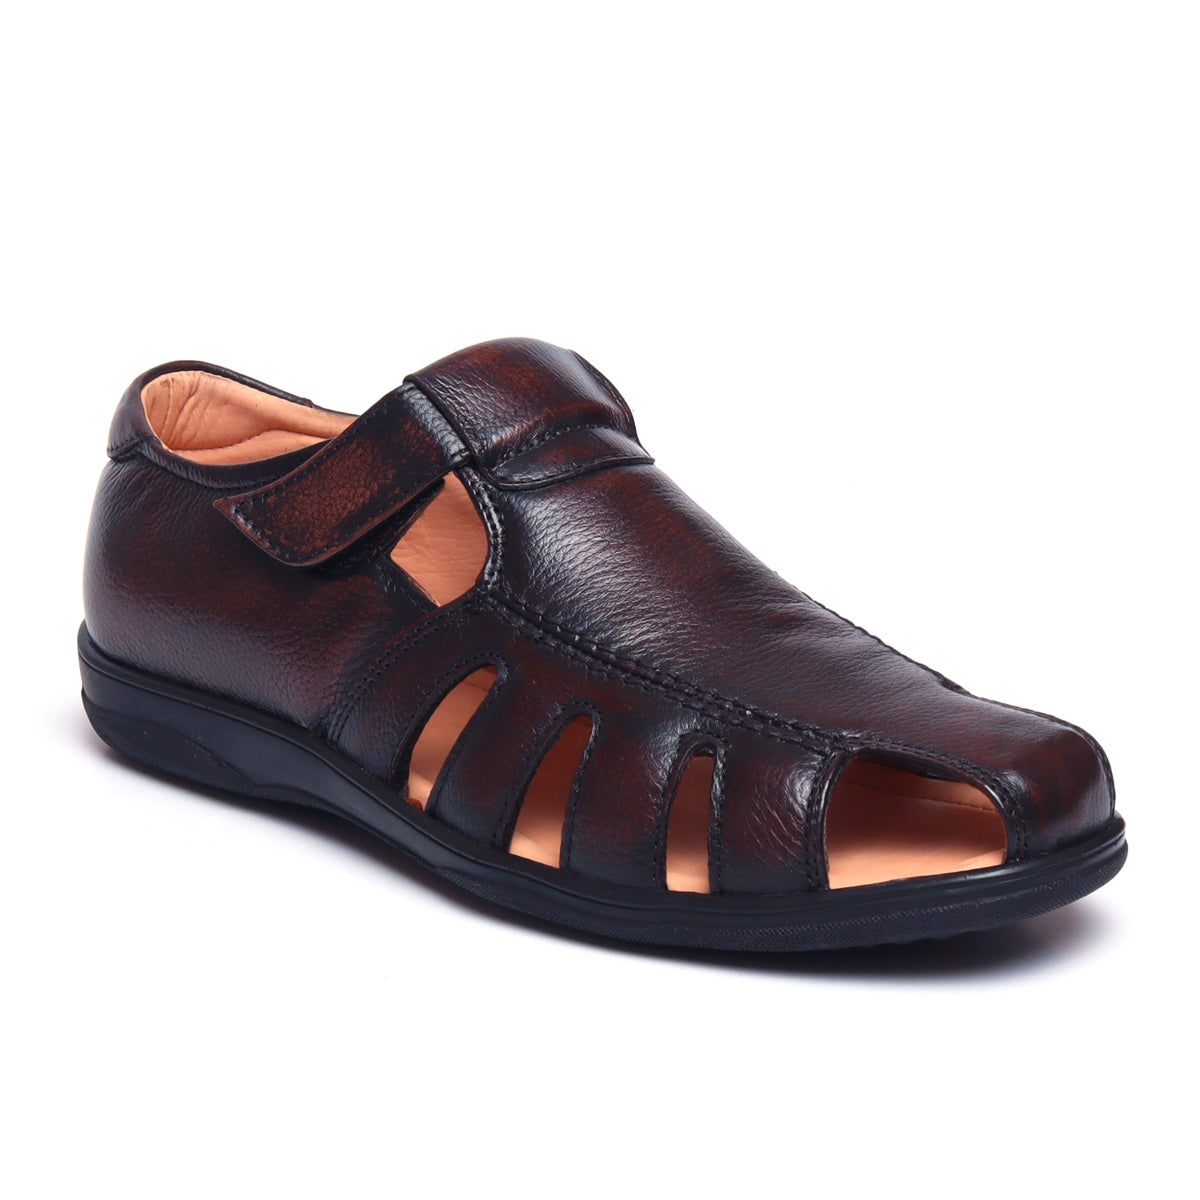 mens black leather sandals_ZS6